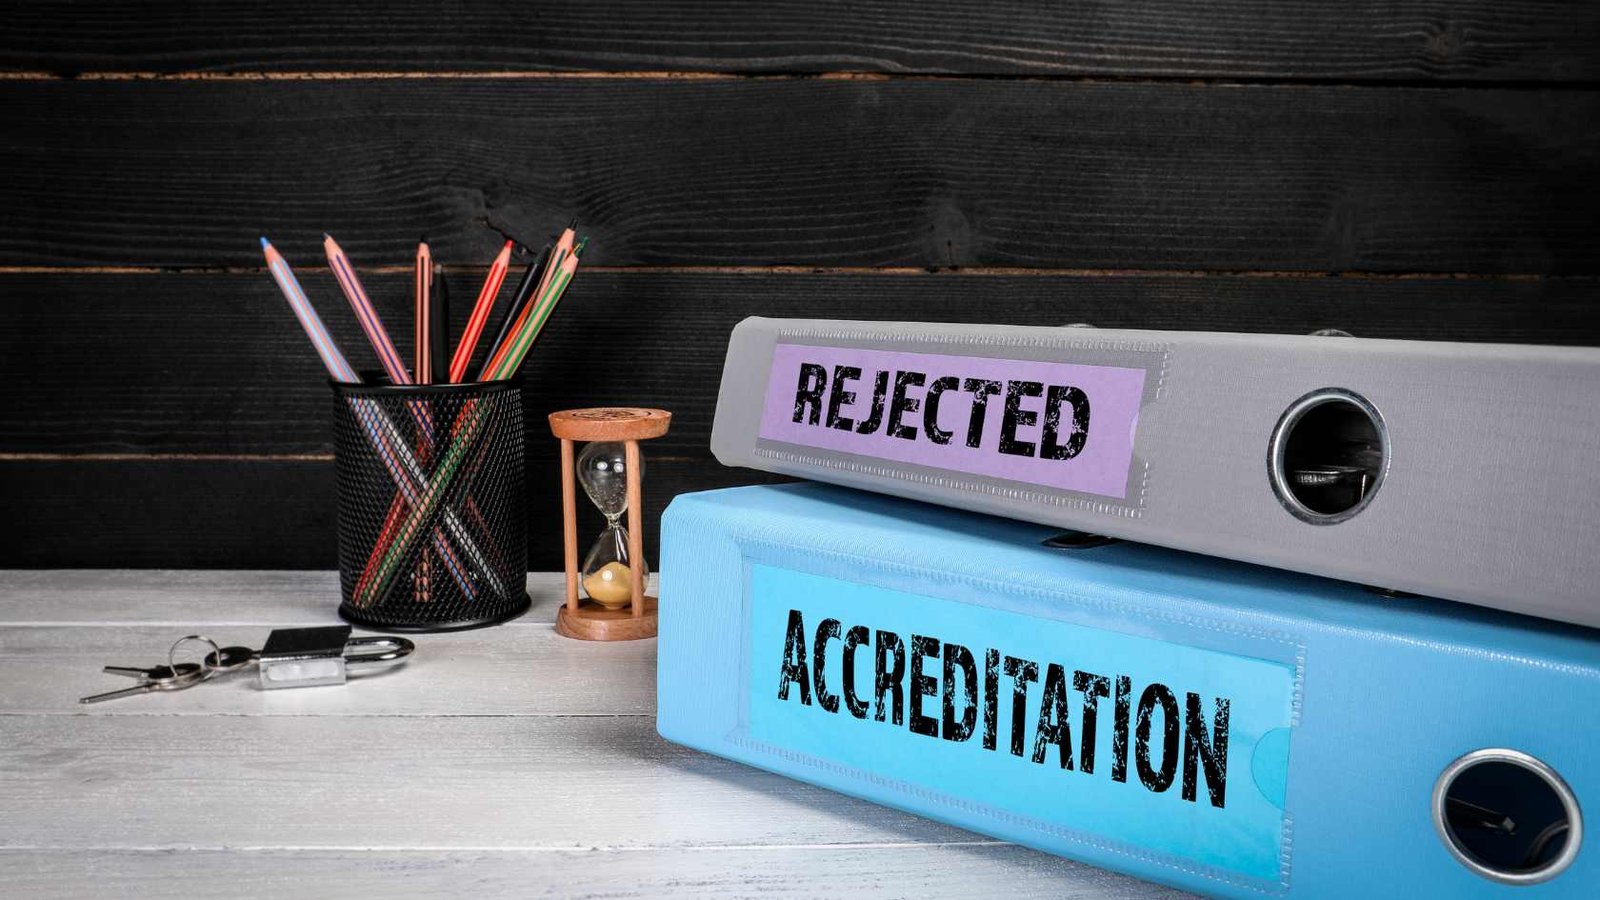 accreditations